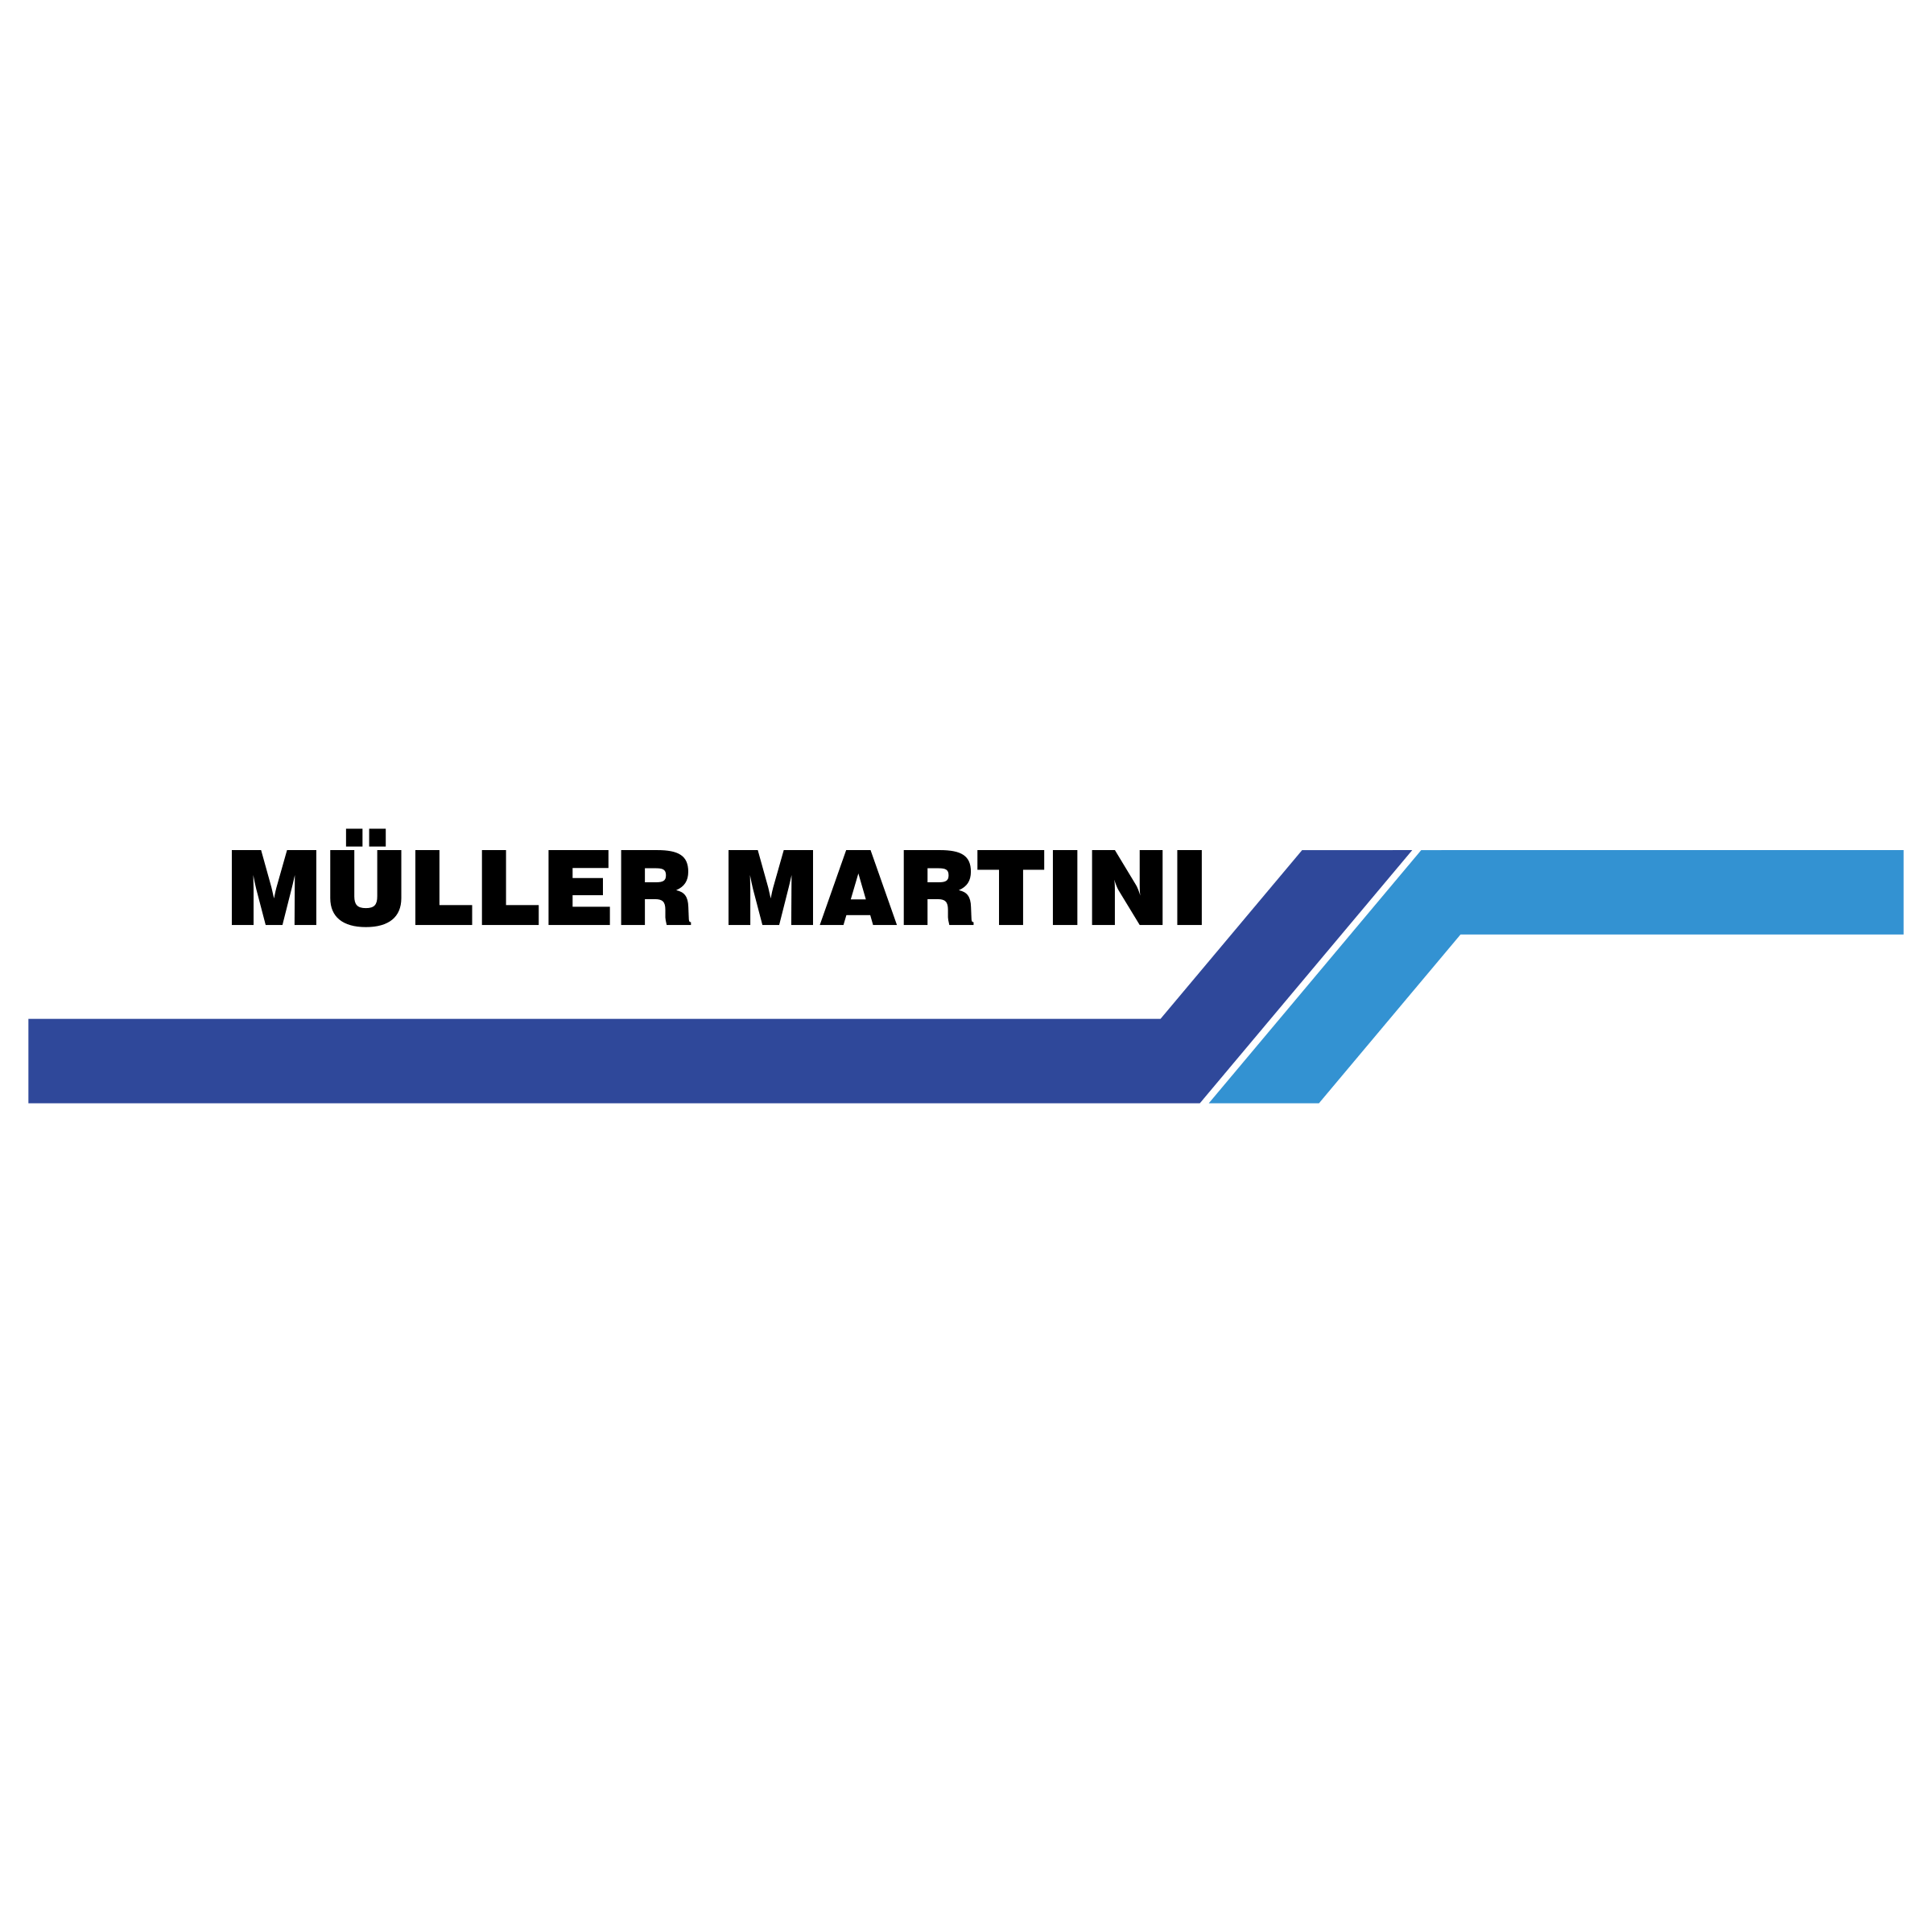 Martini Logo - Muller Martini Logo PNG Transparent & SVG Vector - Freebie Supply